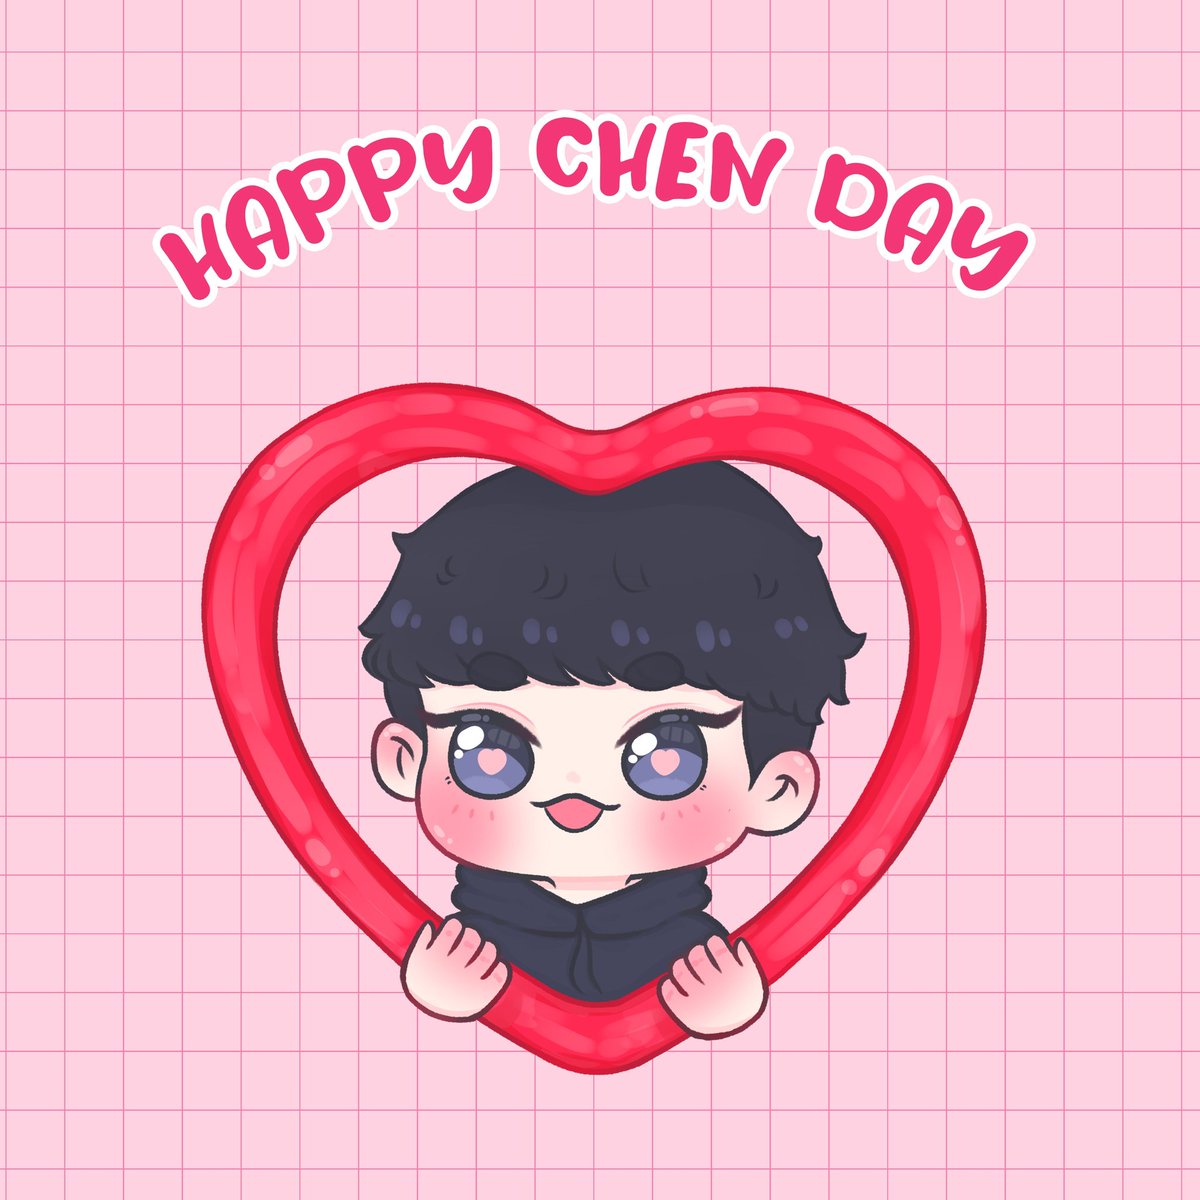 Happy Chen Day 💖 

#종대야_가을의_은하수를_함께건너자
#HappySunshineDae #HappyChenDay
#CHEN #첸 #종대